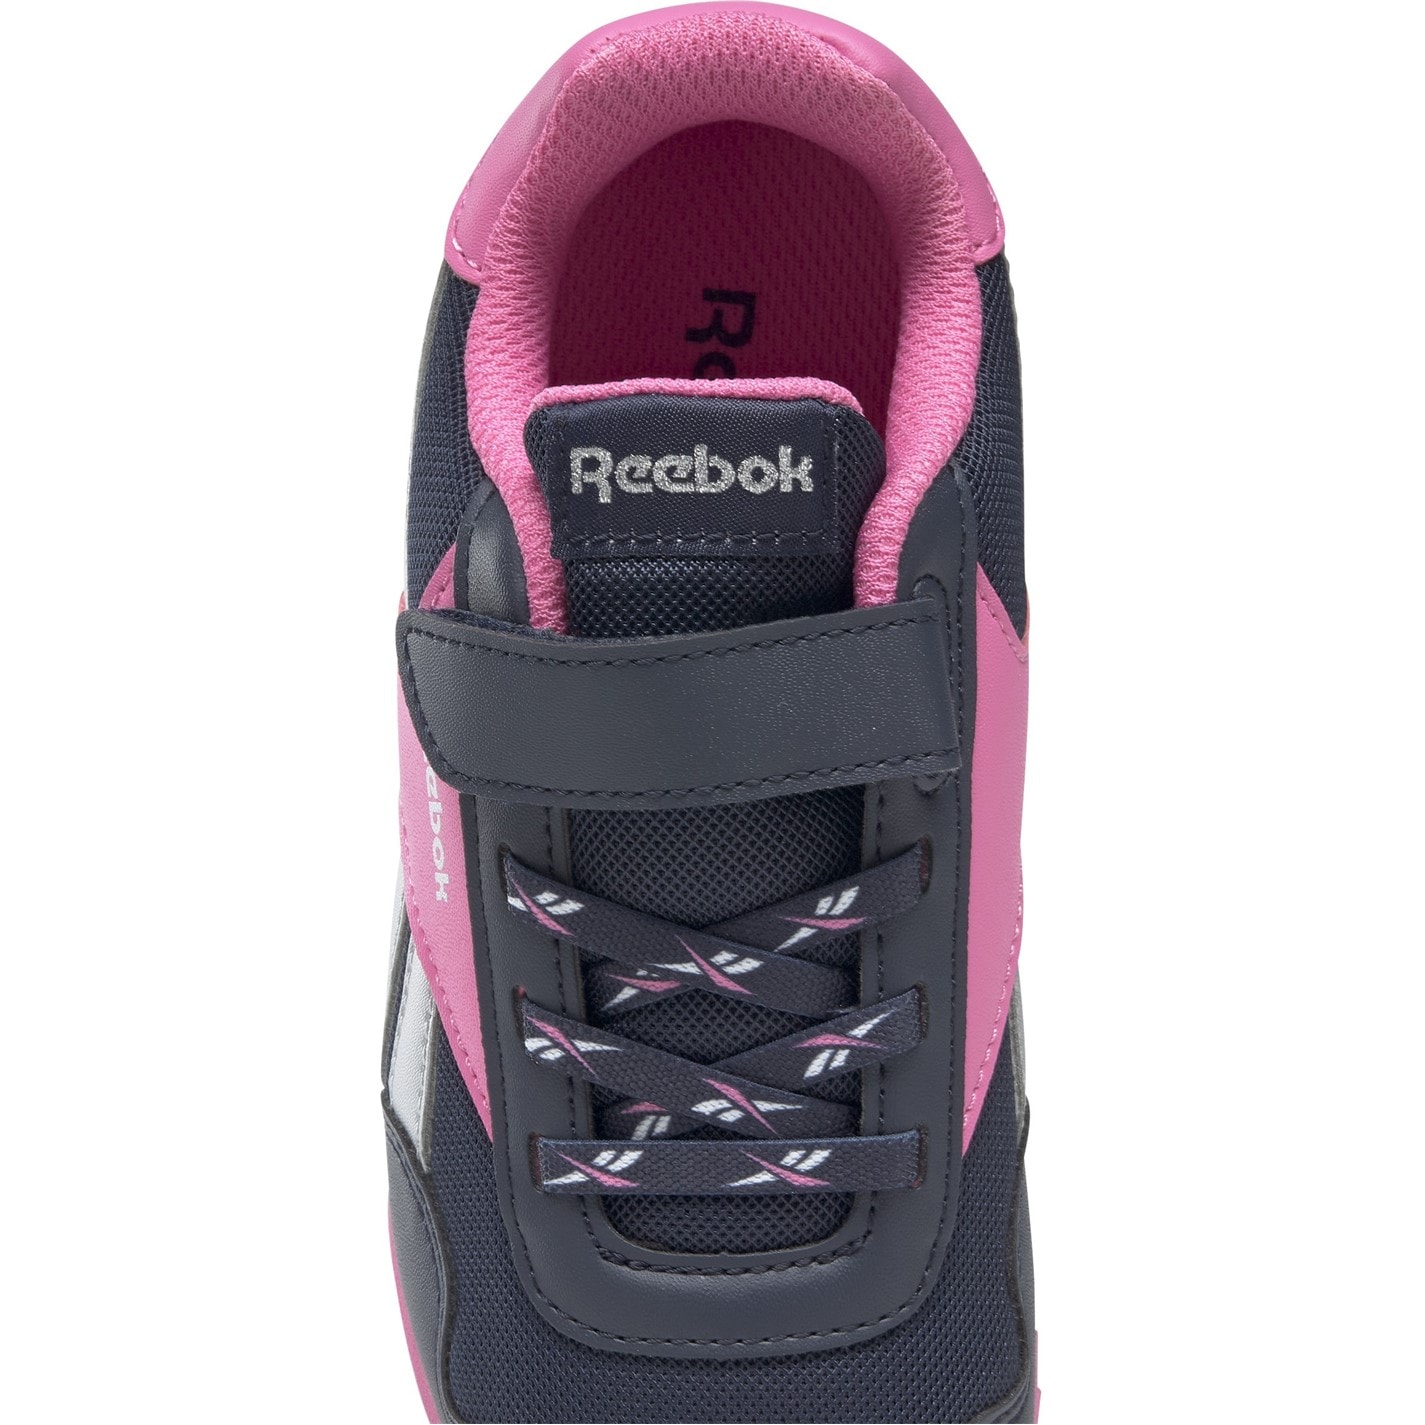 Pantof sport Reebok Jogger RS Child fetita